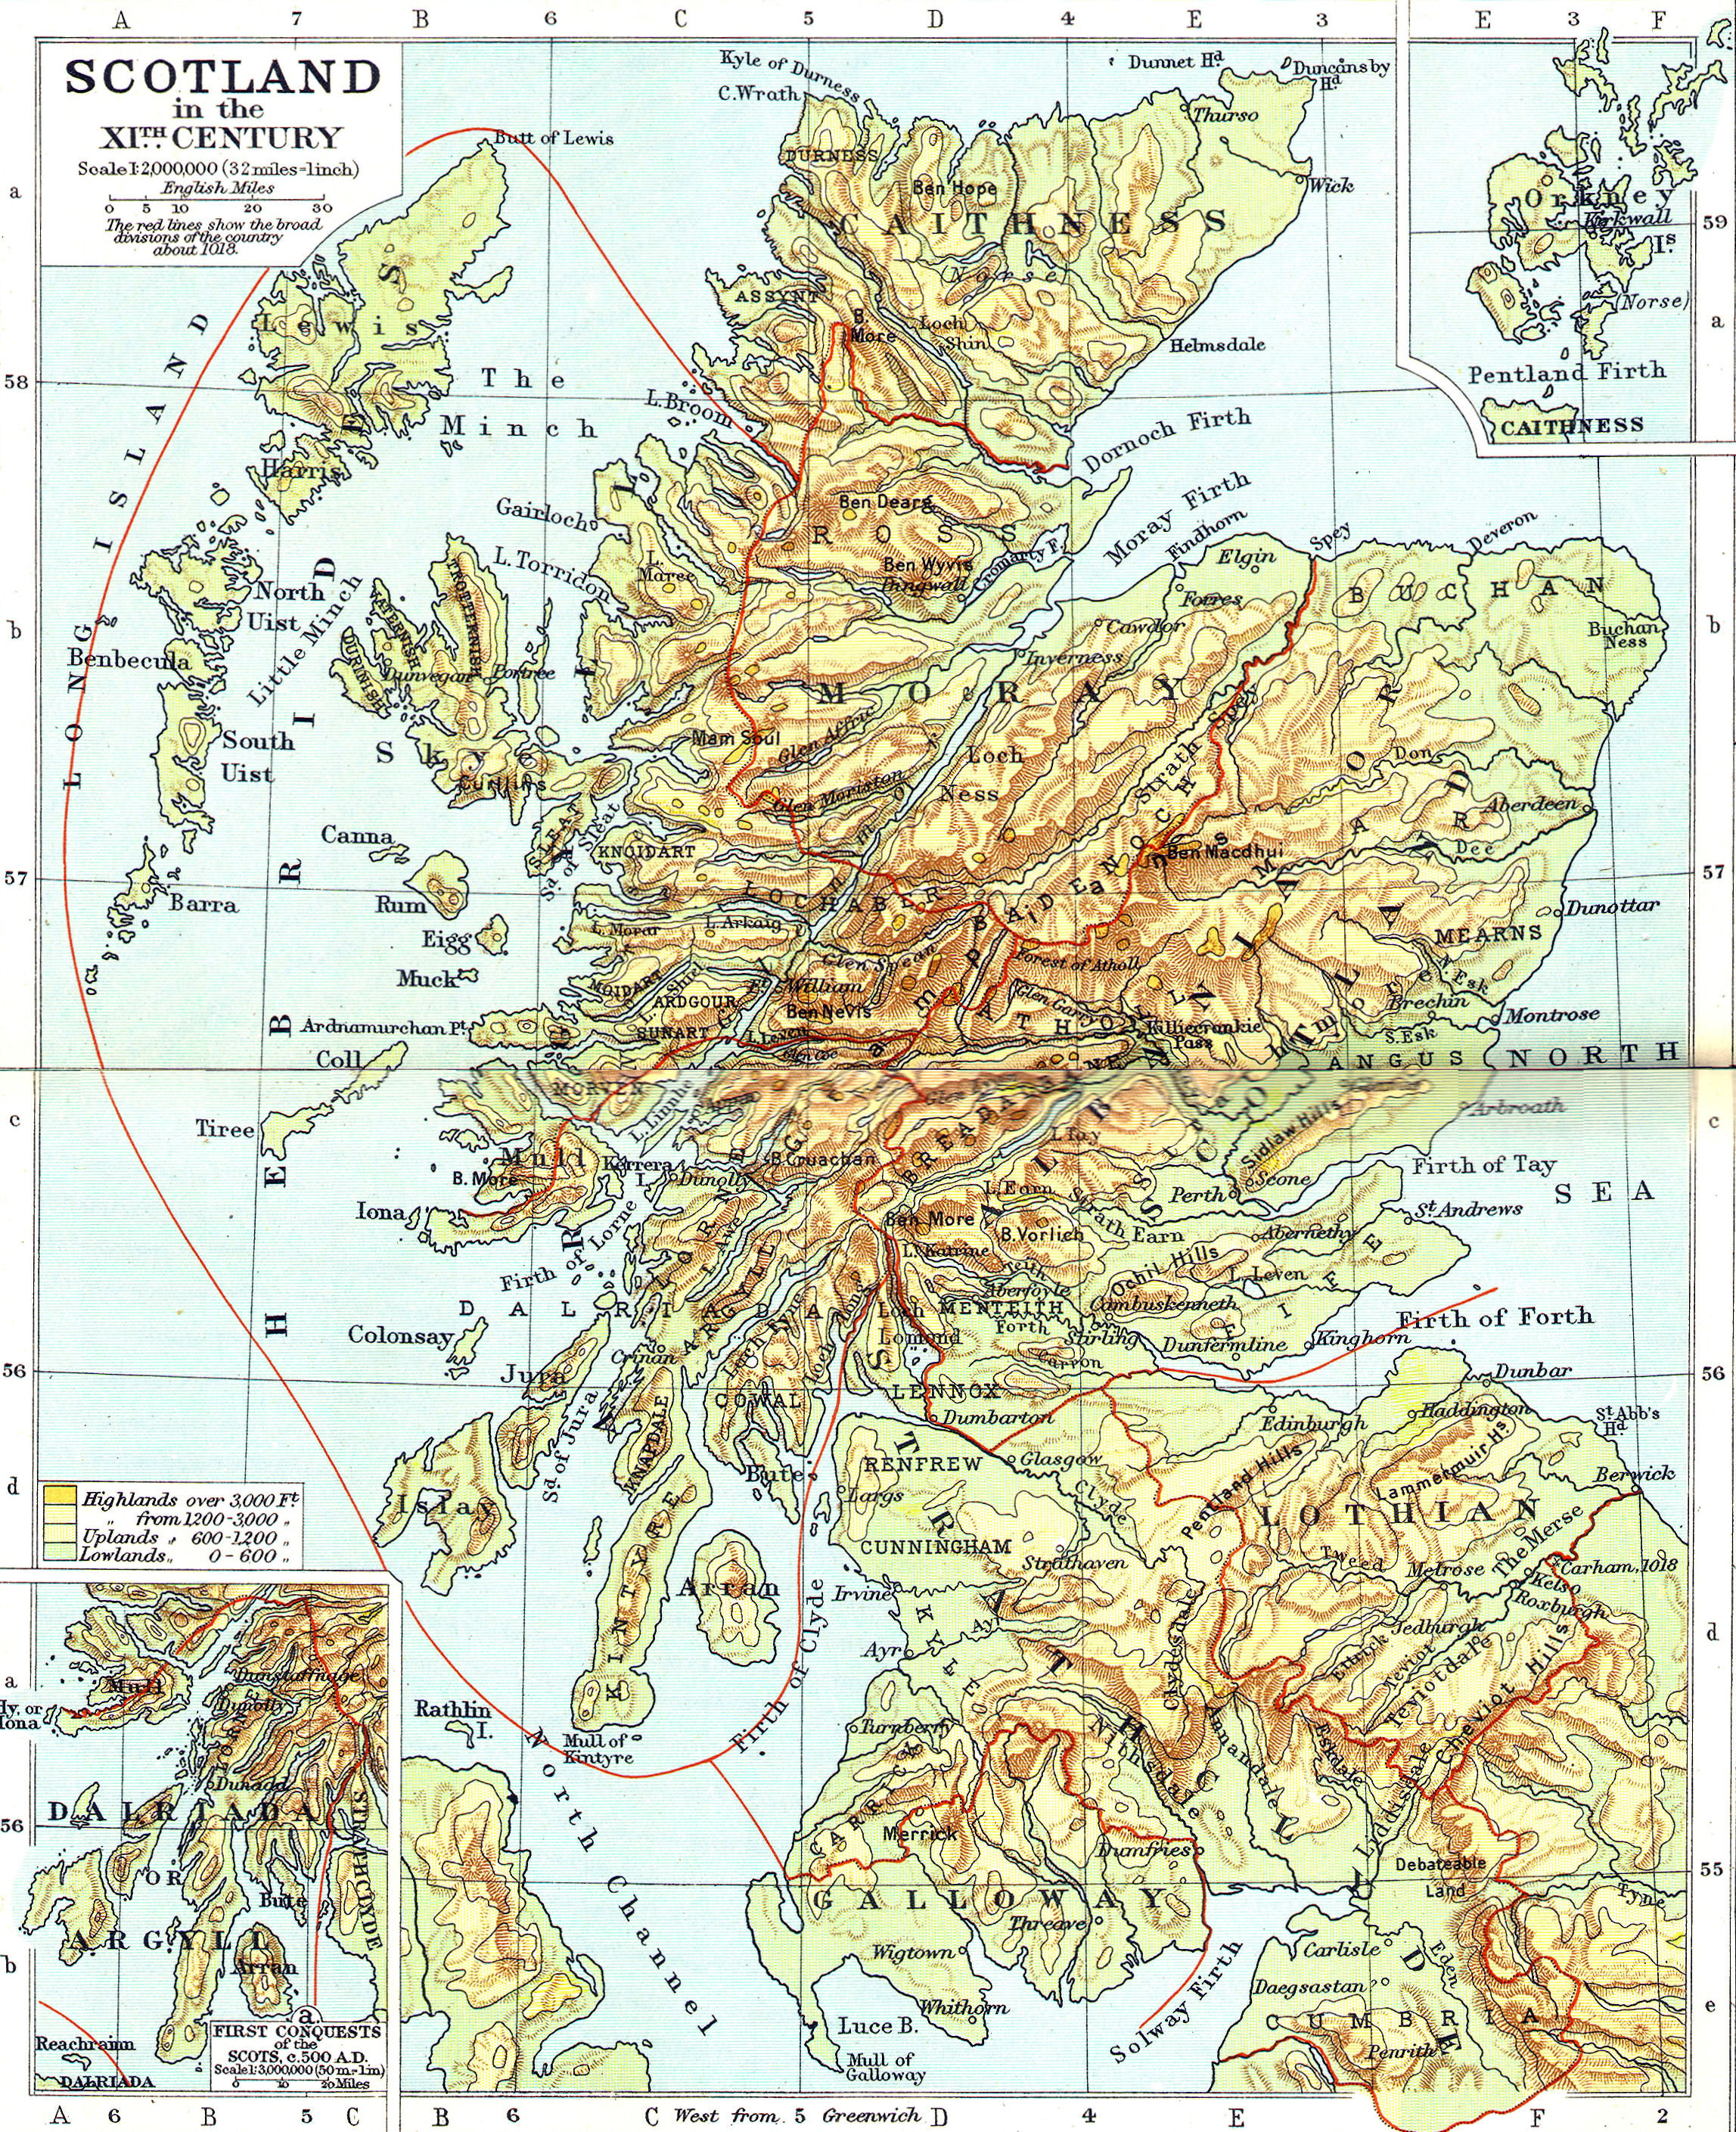 scotland in the 11th century